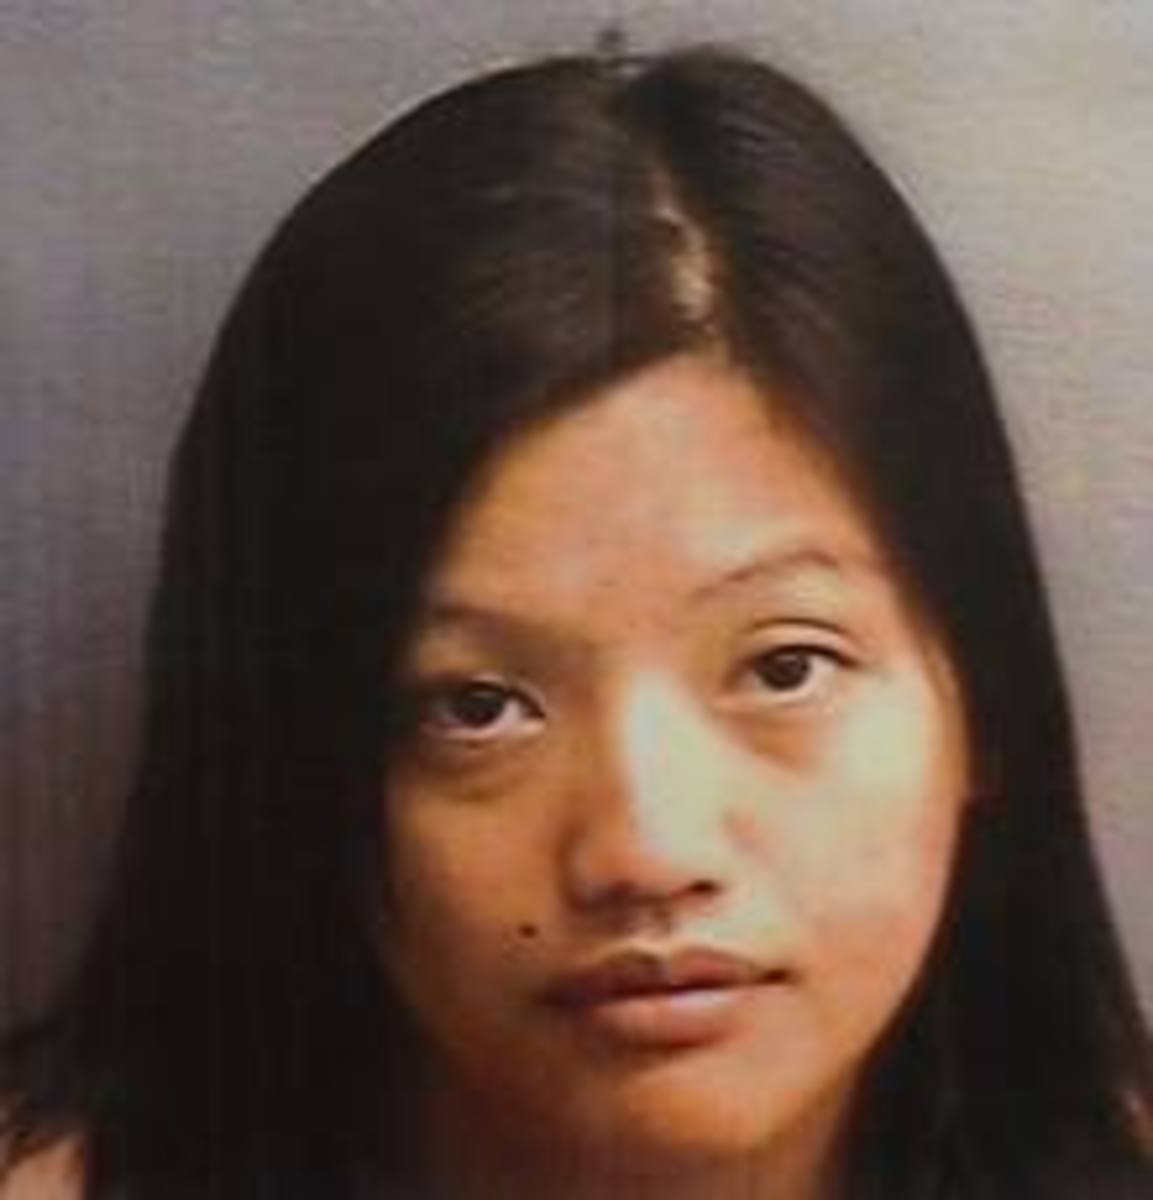 Giselle Esteban was arrested on Sept. 7,2011 for the murder of Michelle Le.